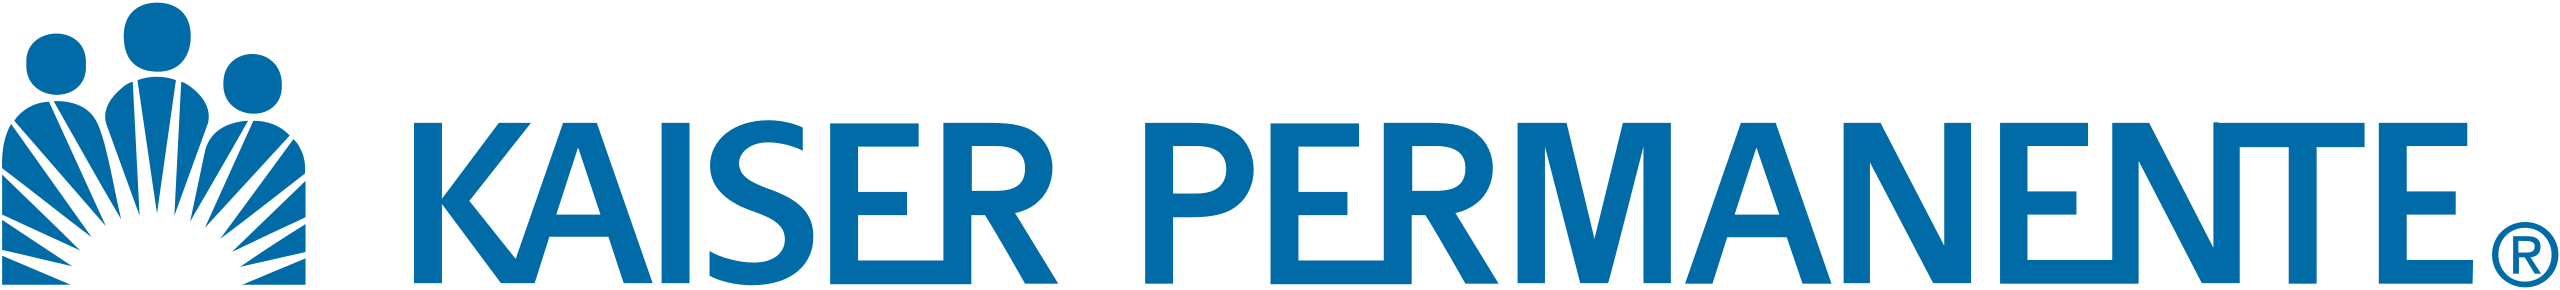 Kaiser Permanente Logo PNG Image